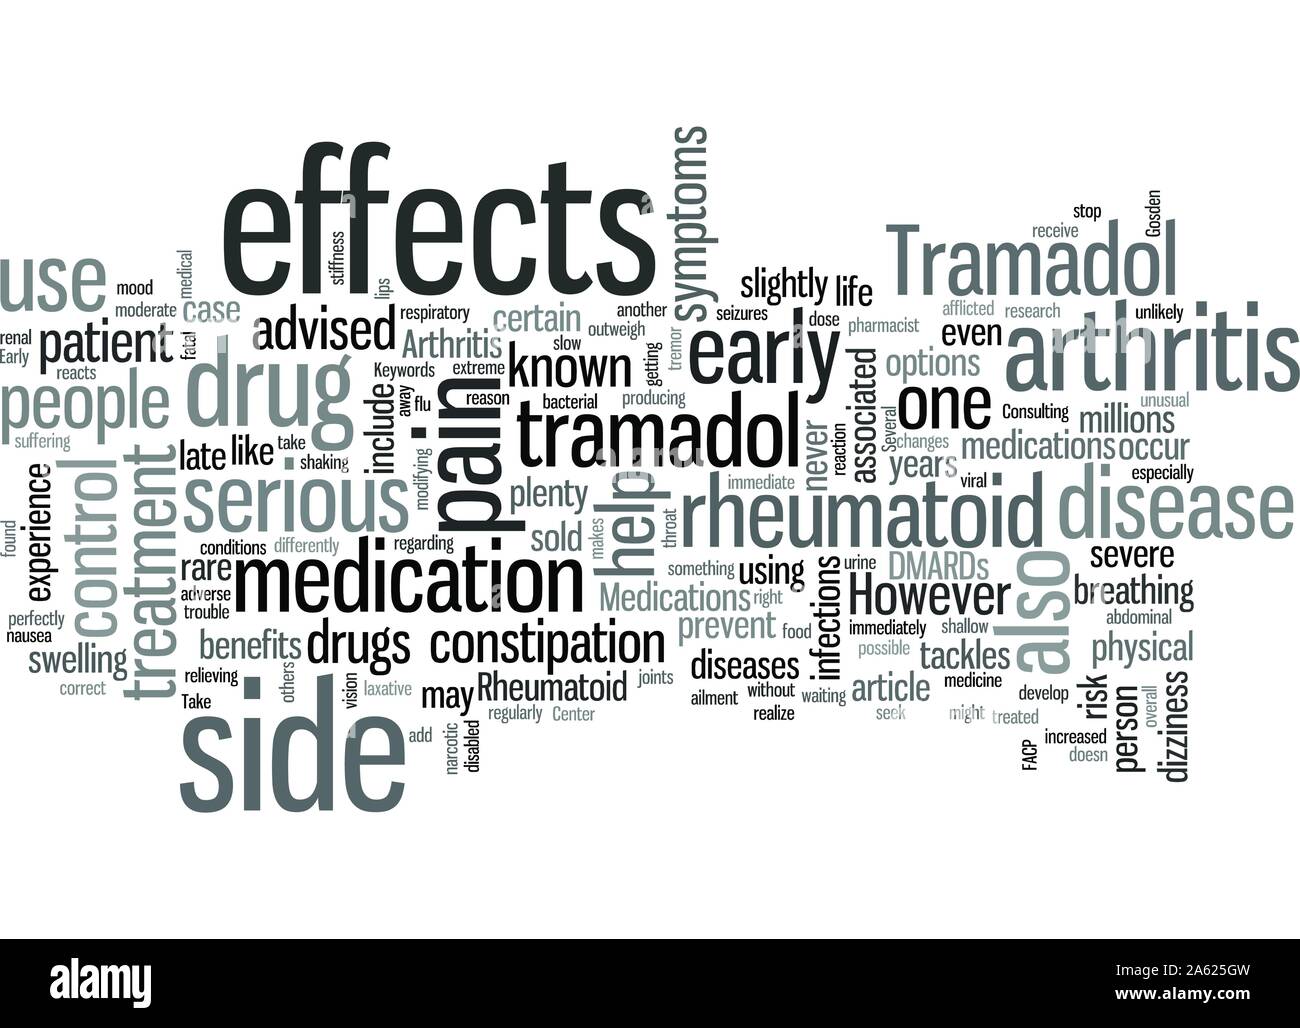 Rheumatoid Arthritis And Tramadol Side Effects Stock Vector Image Art Alamy